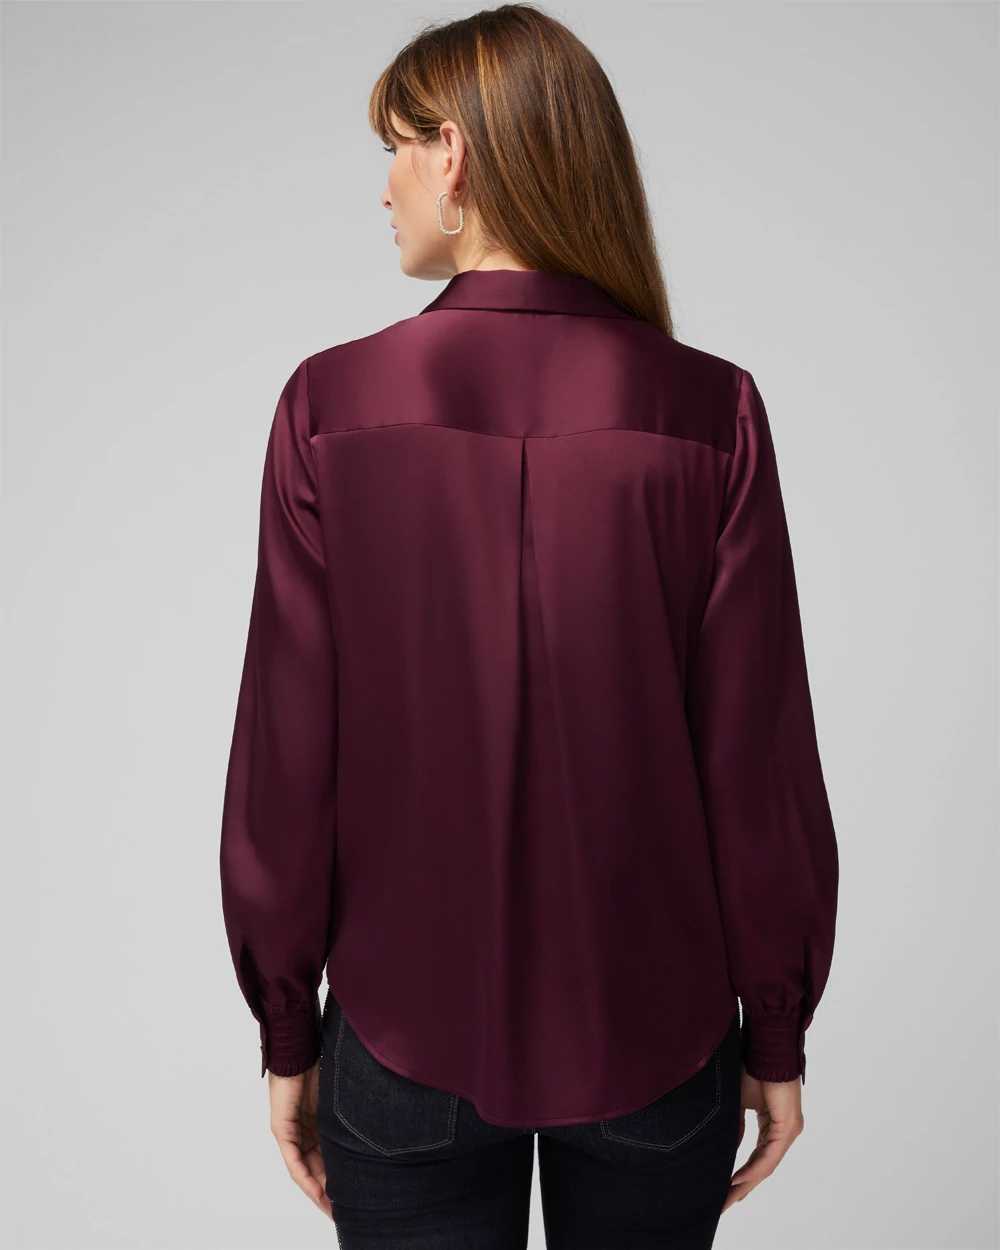 Long Sleeve Cuff Satin Shirt click to view larger image.